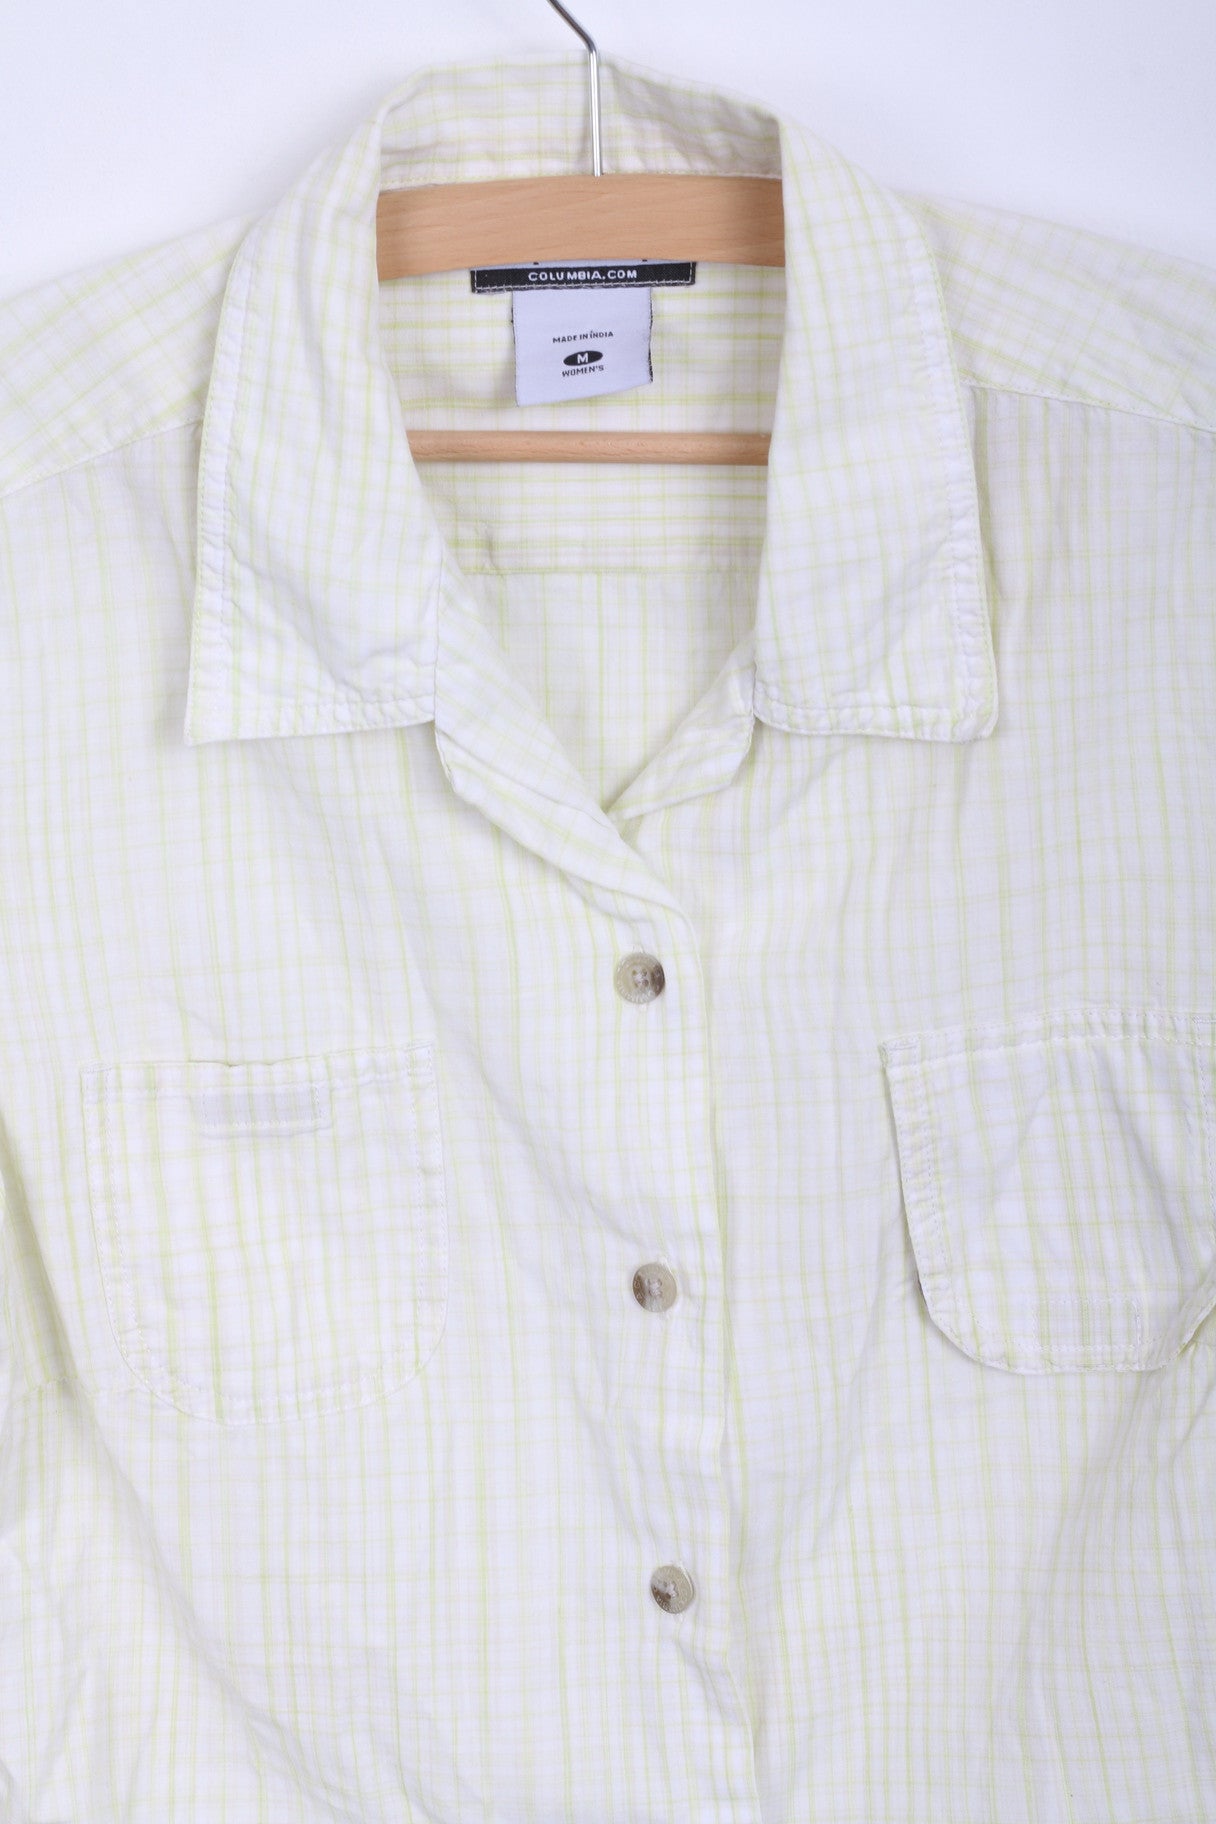 Columbia Womens M Casual Shirt Check Short Sleeve Cotton